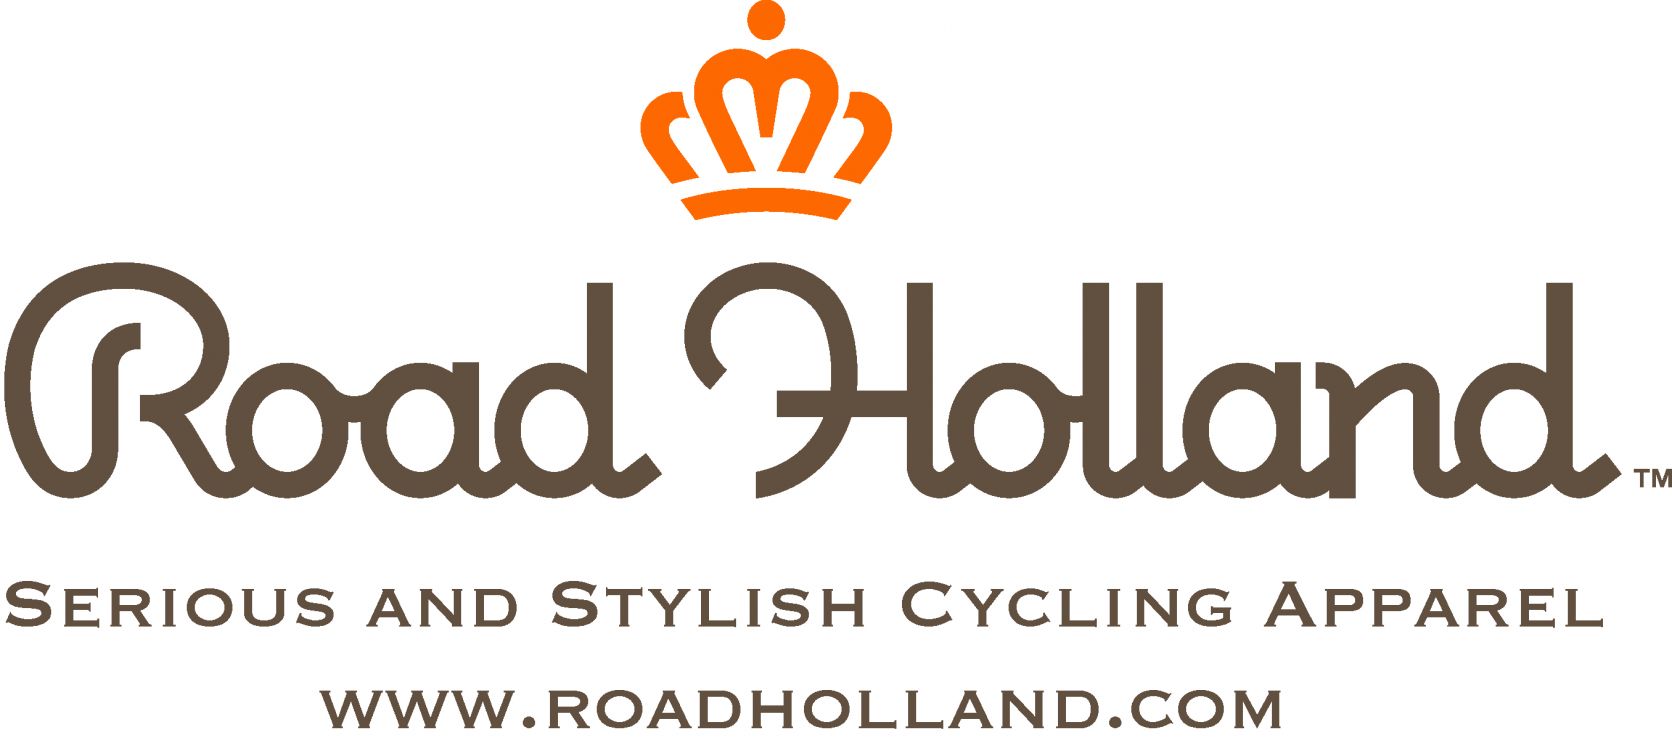 Road Holland Cycling Apparel Logo